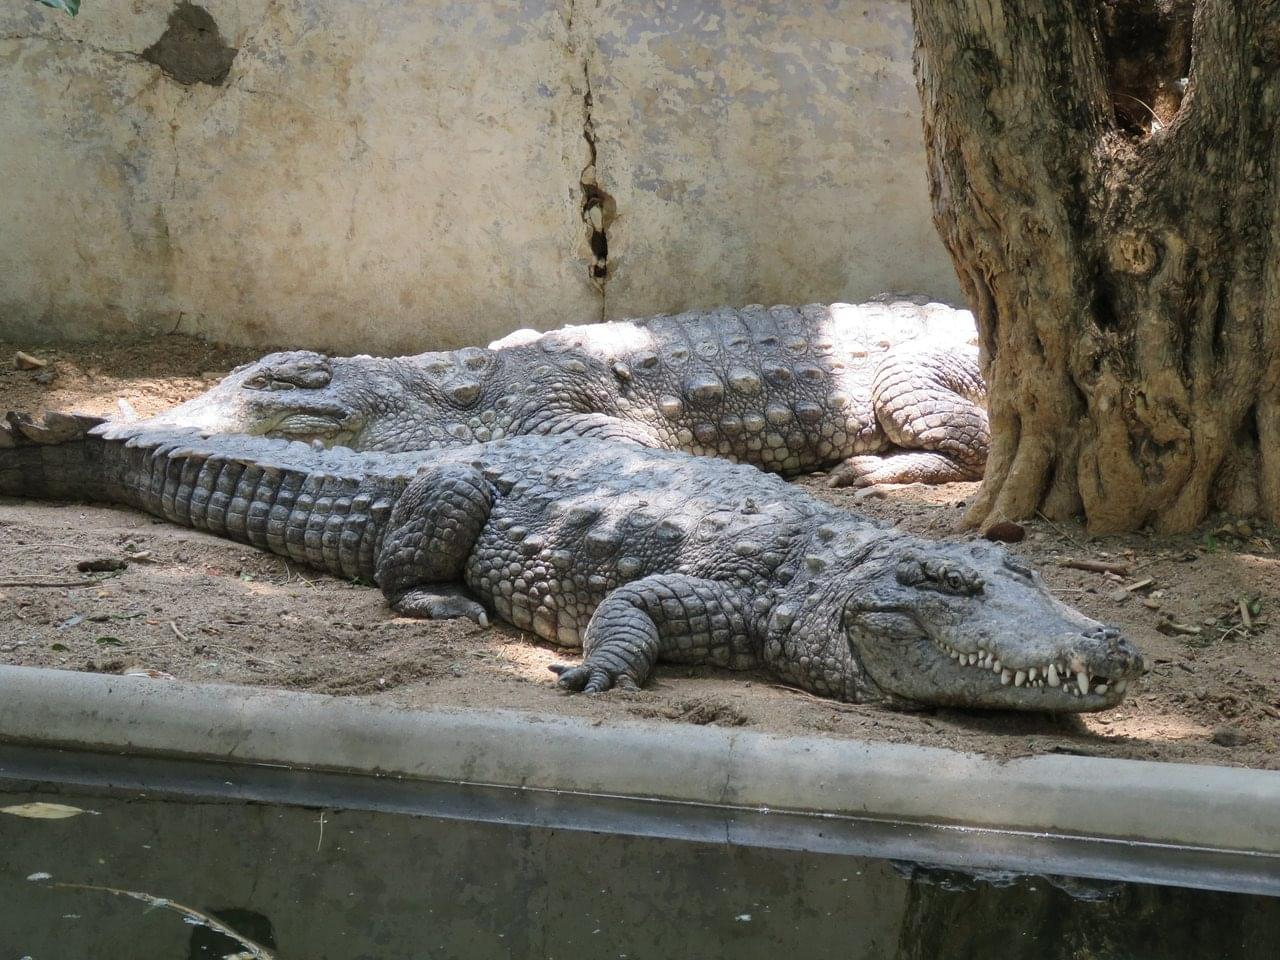 Visiting the Crocodile Rehabilitation Centre